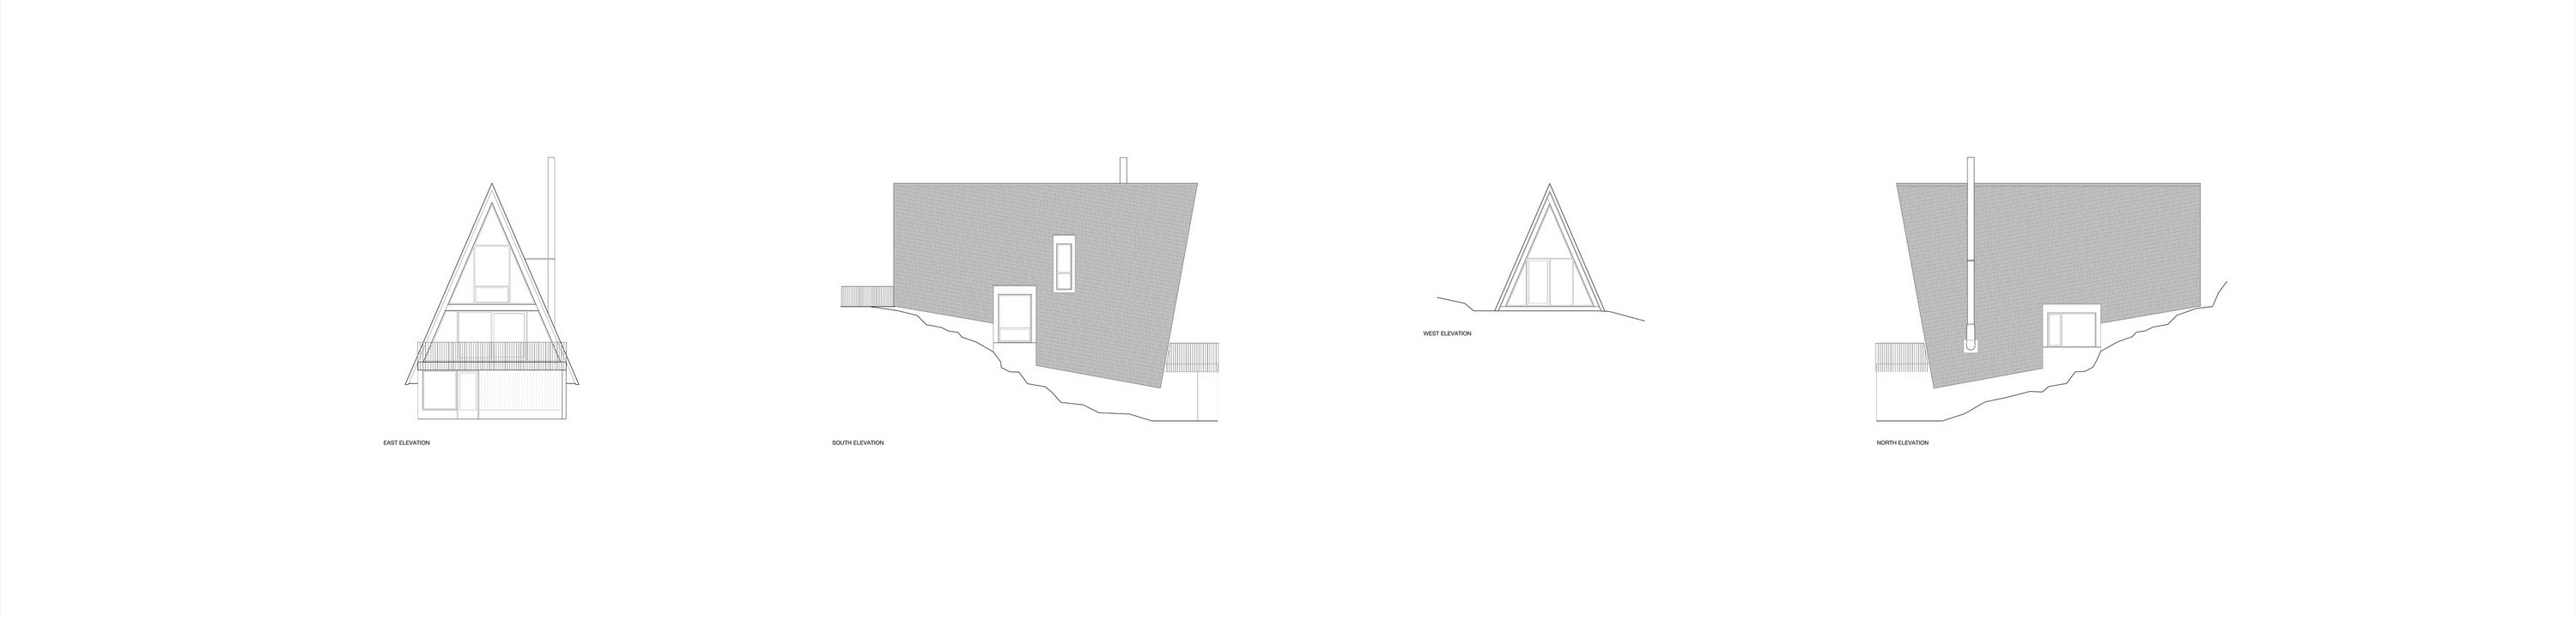 Whistler Cabin by Scott & Scott Architects